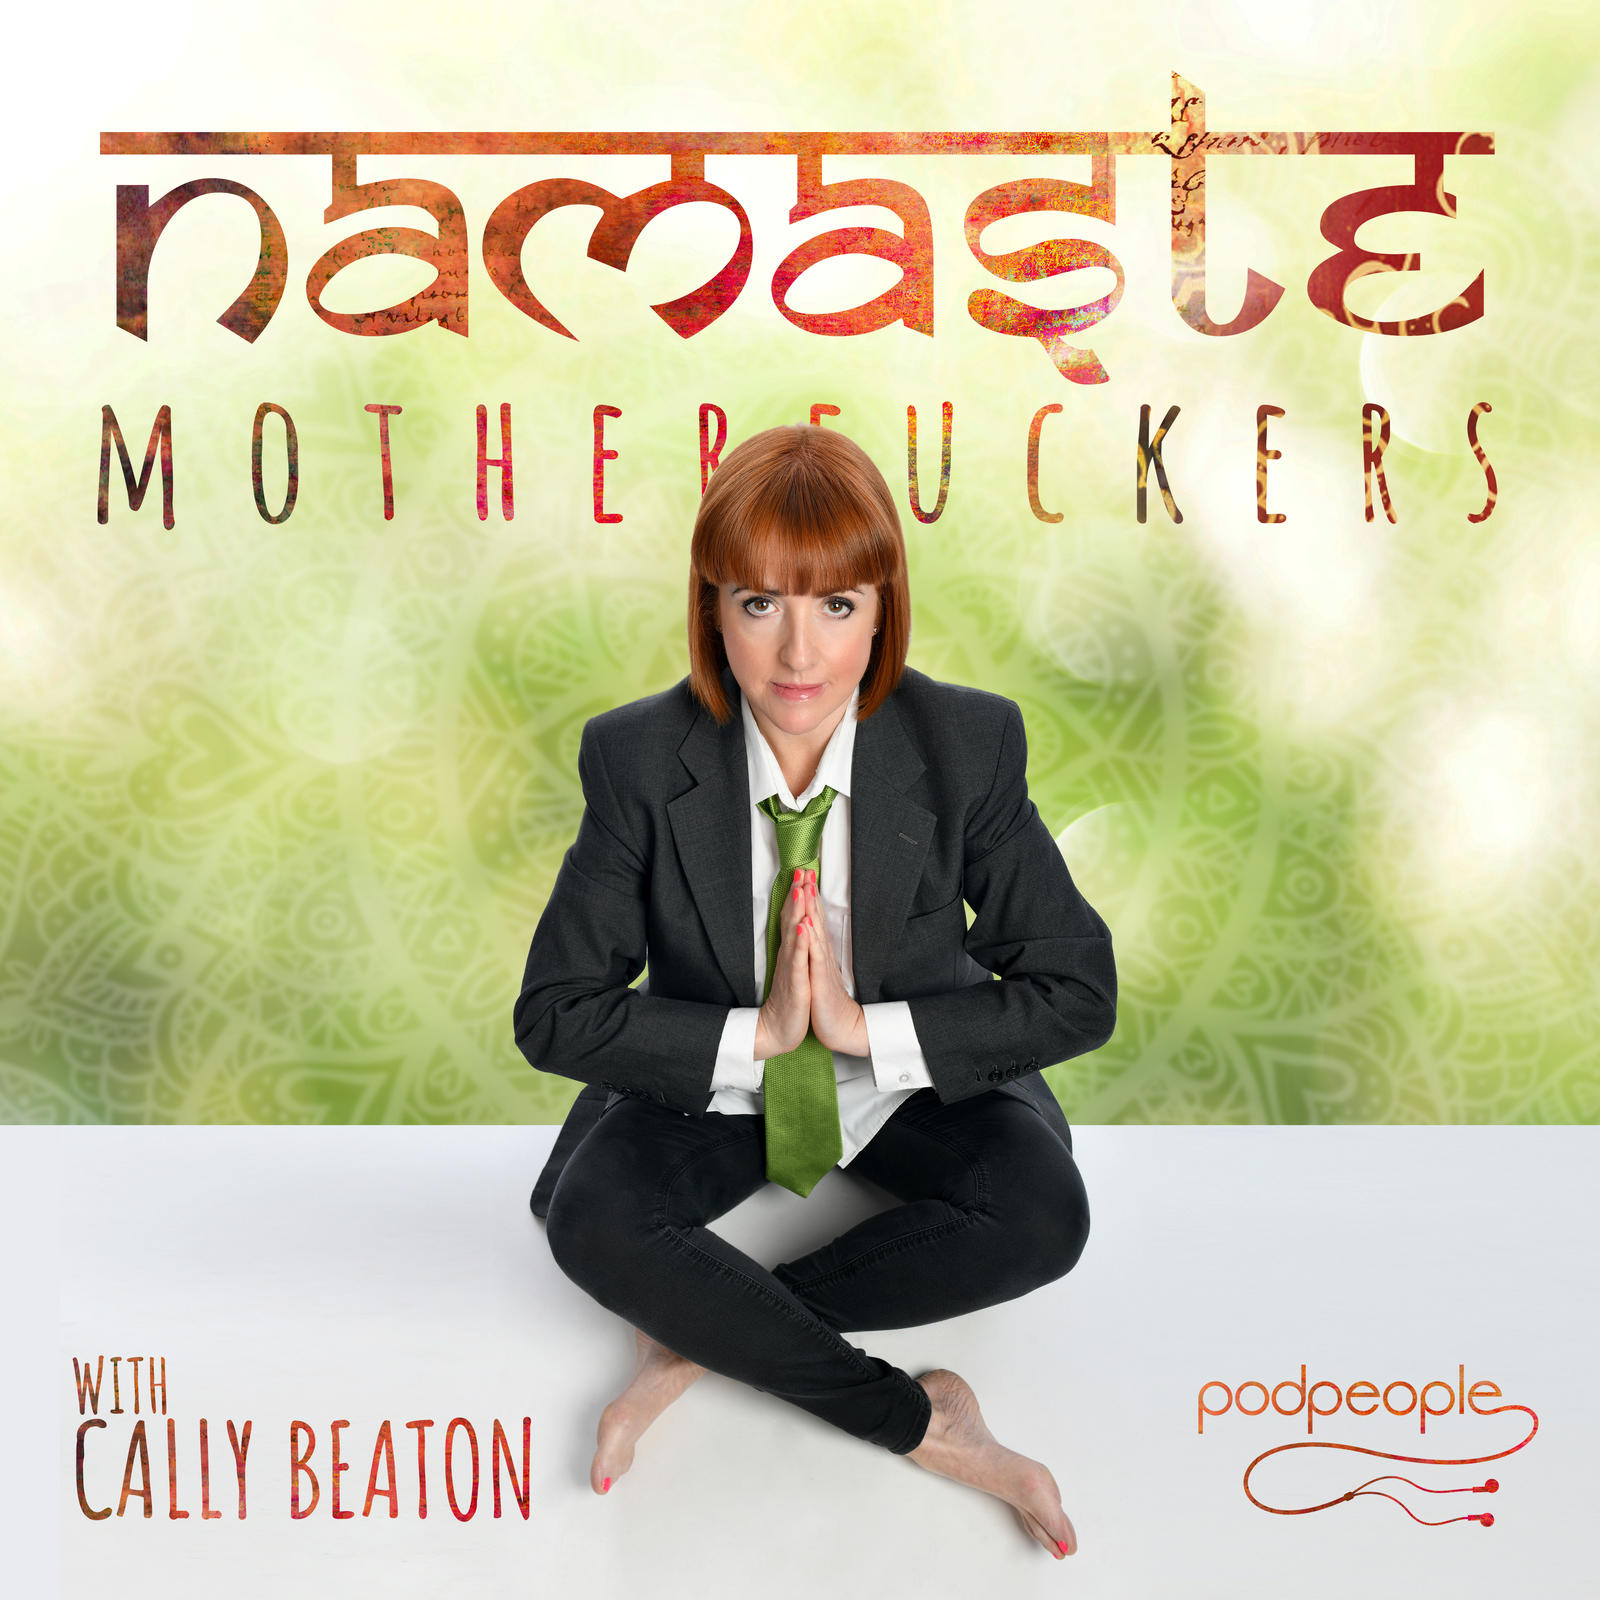 Comedian Cally Beaton Podcast Namaste Motherfuckers